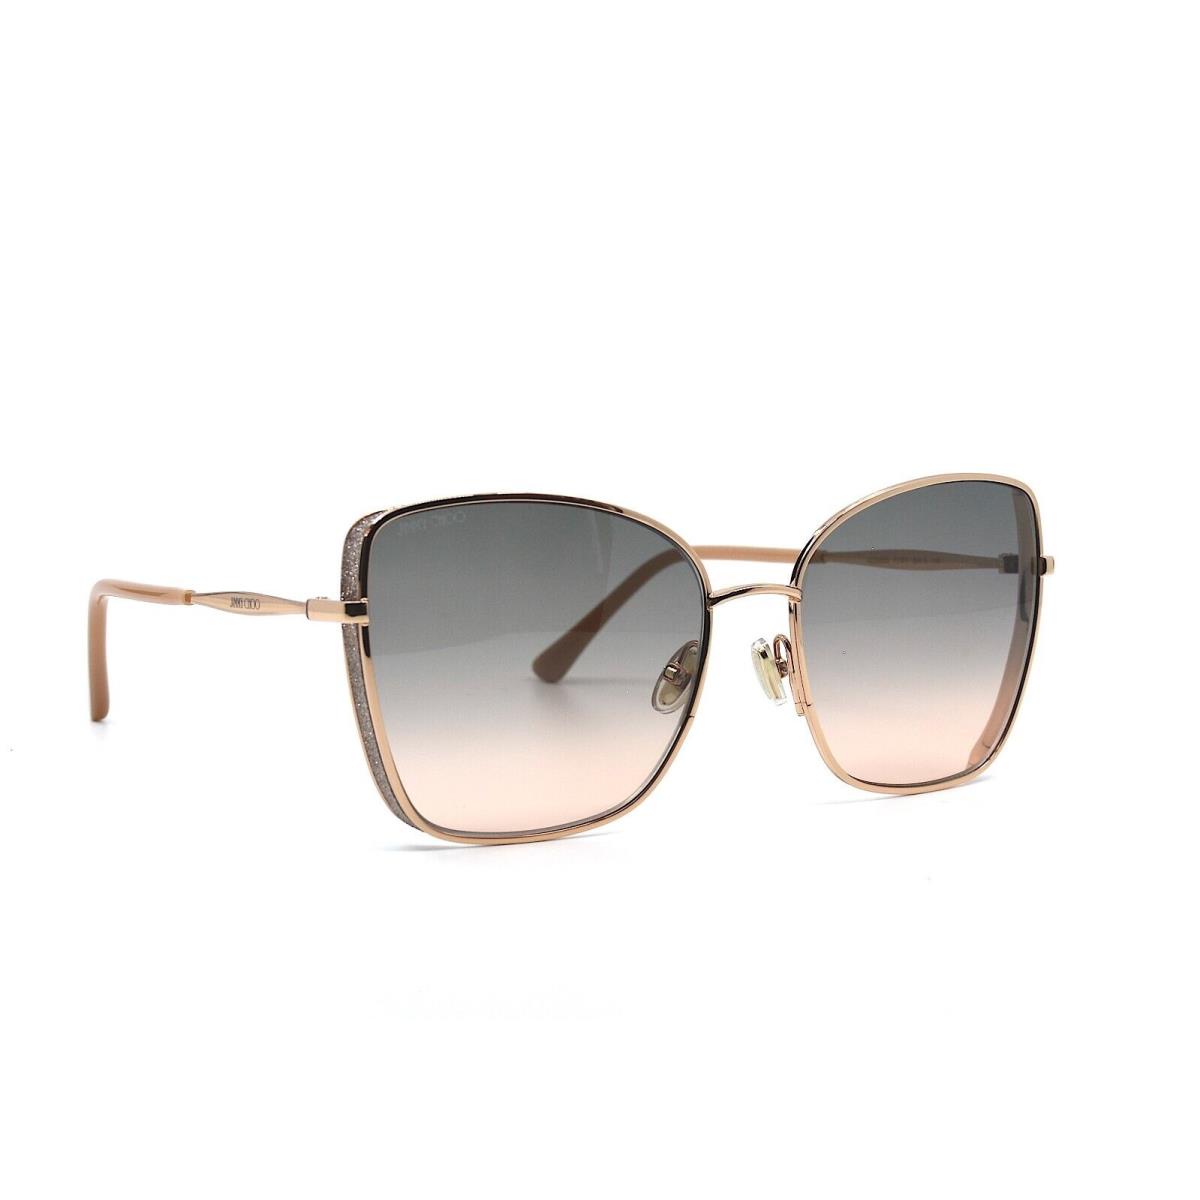 Jimmy Choo Alexis/s PY3 Cold Copper Grey Gradient Sunglasses